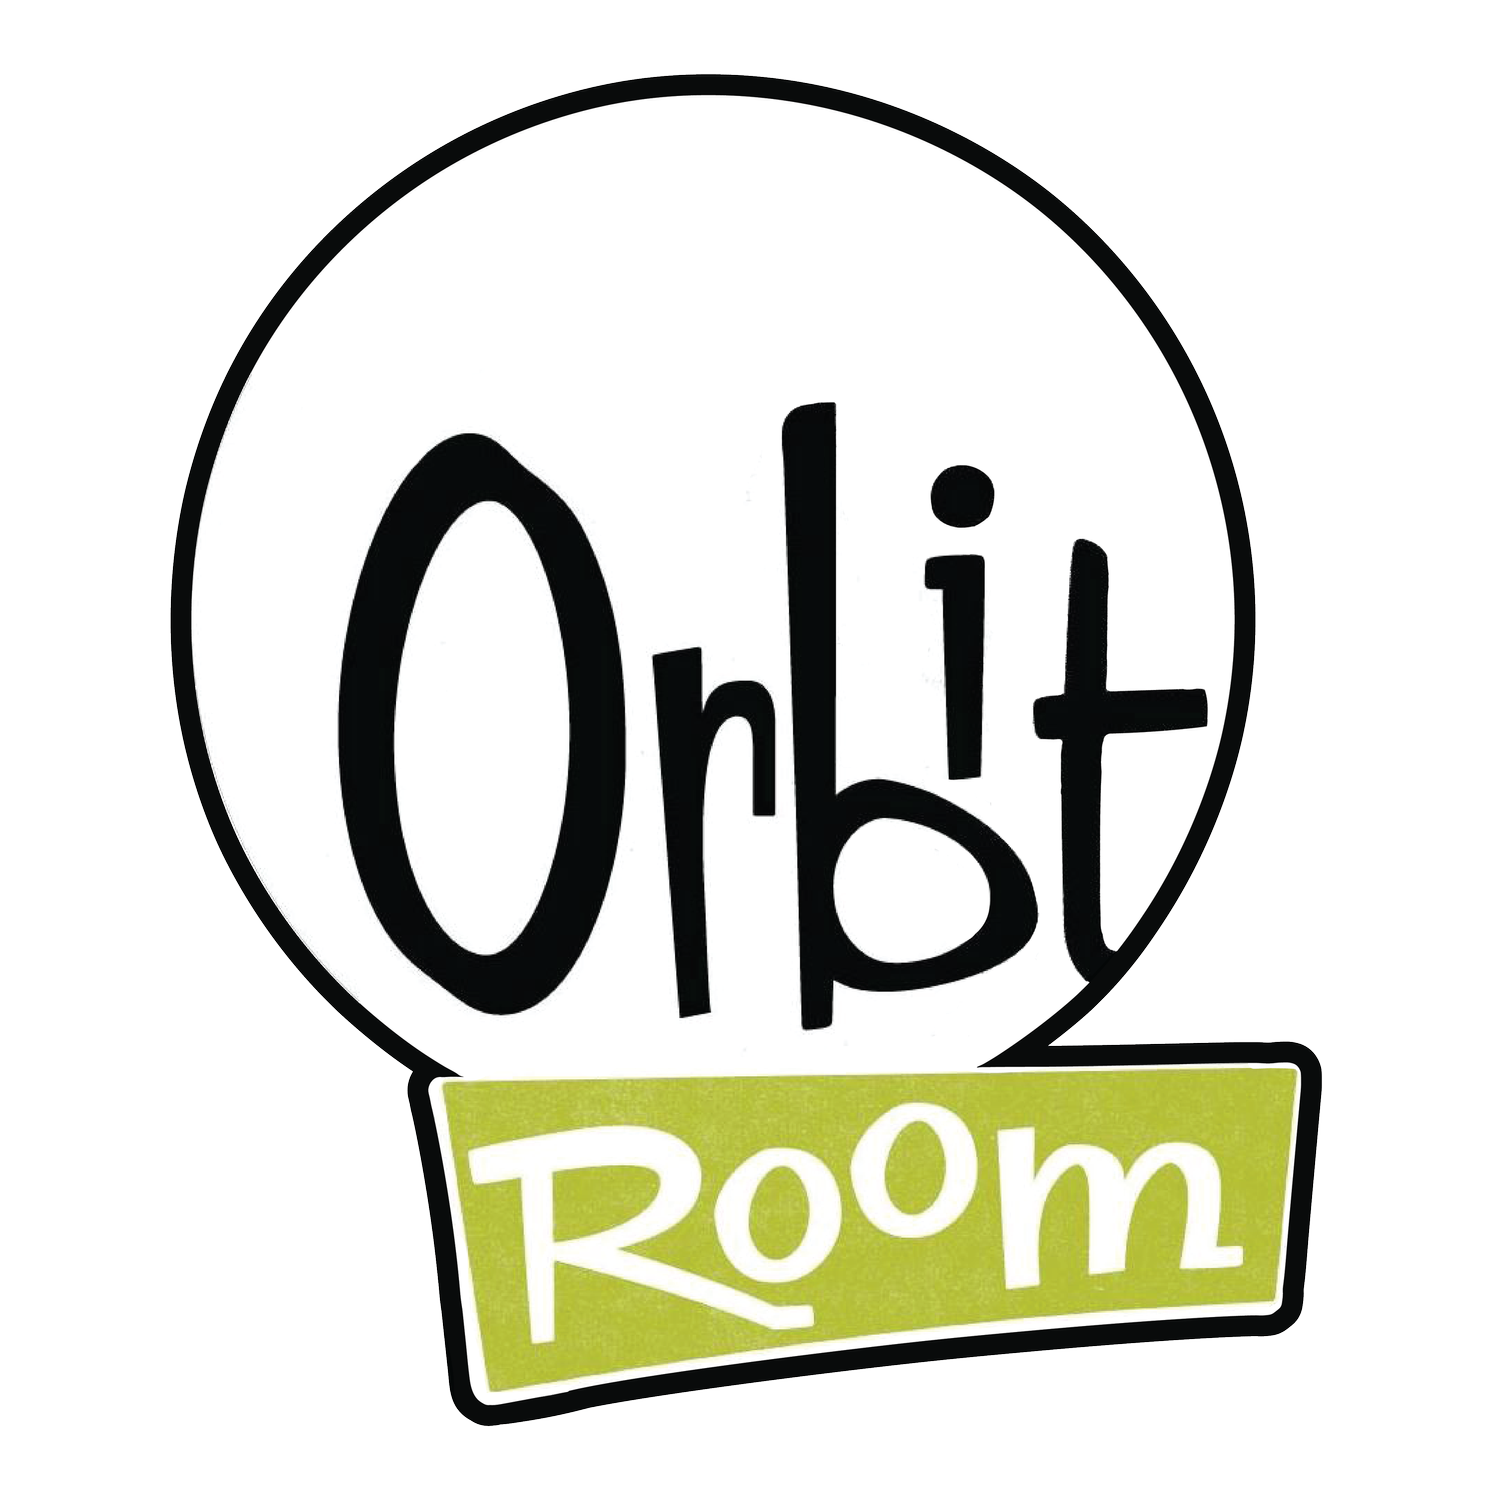 Orbit Room